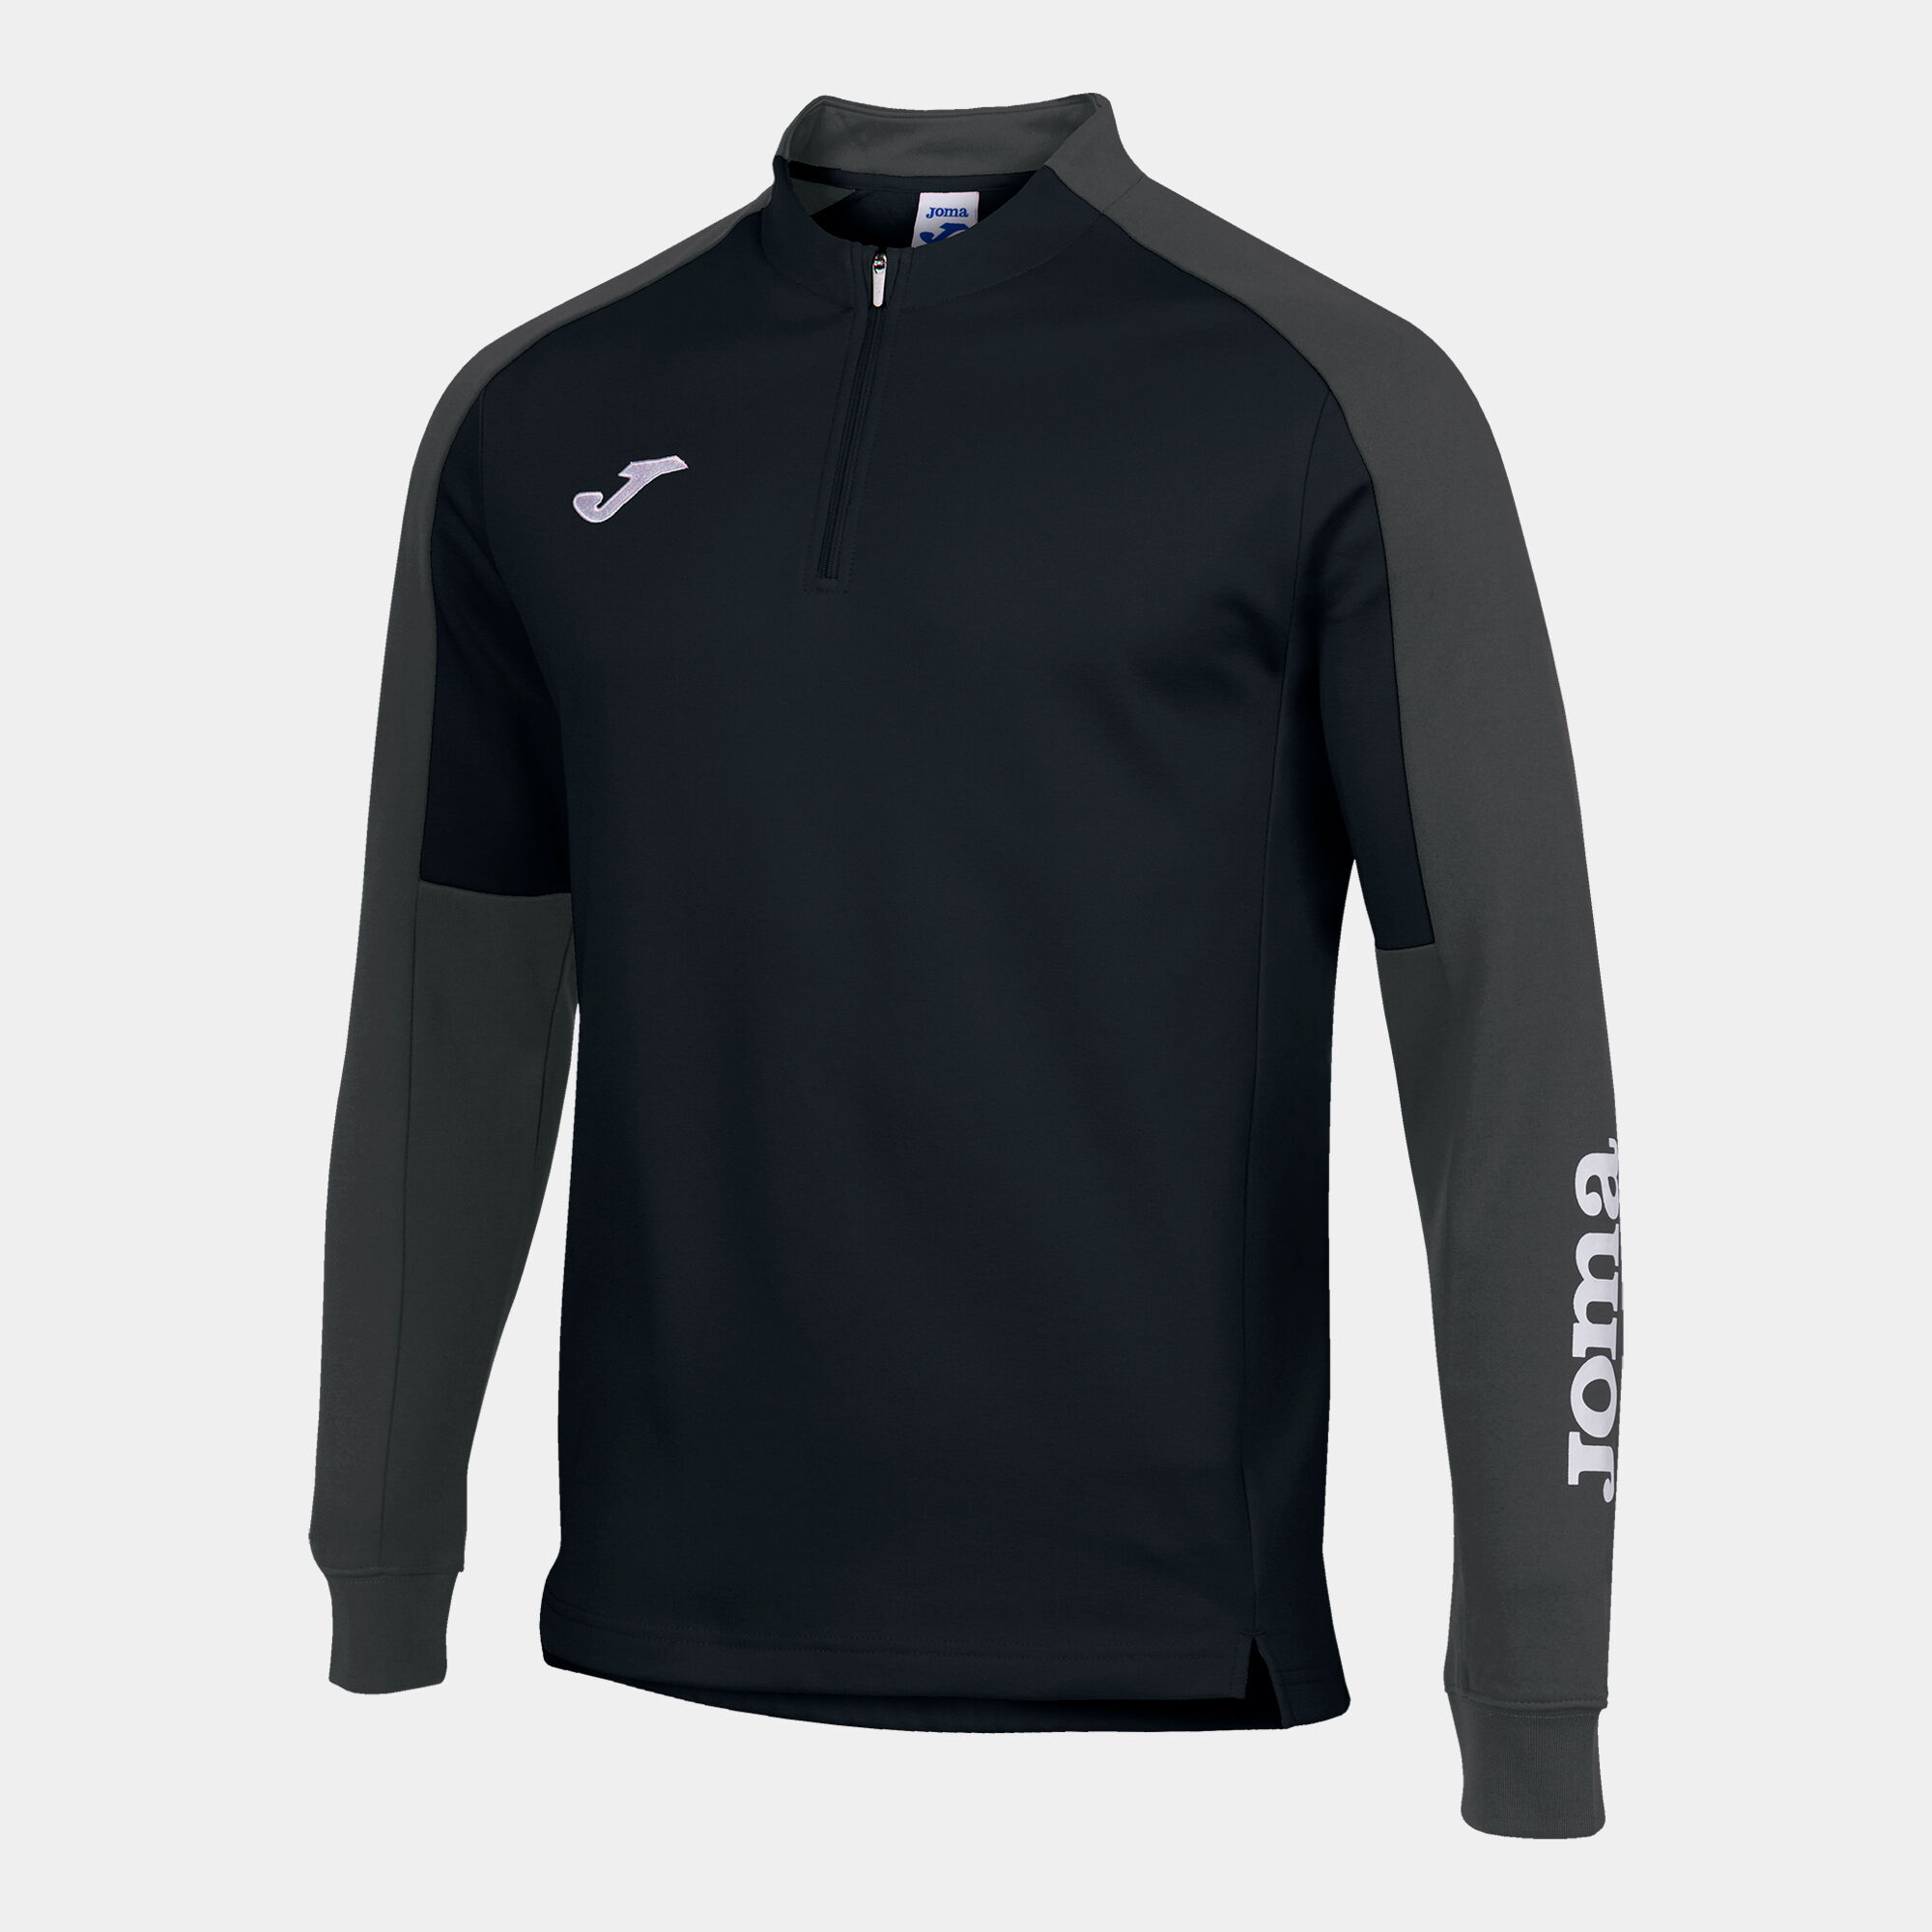 Sweat-shirt homme Eco Championship noir anthracite